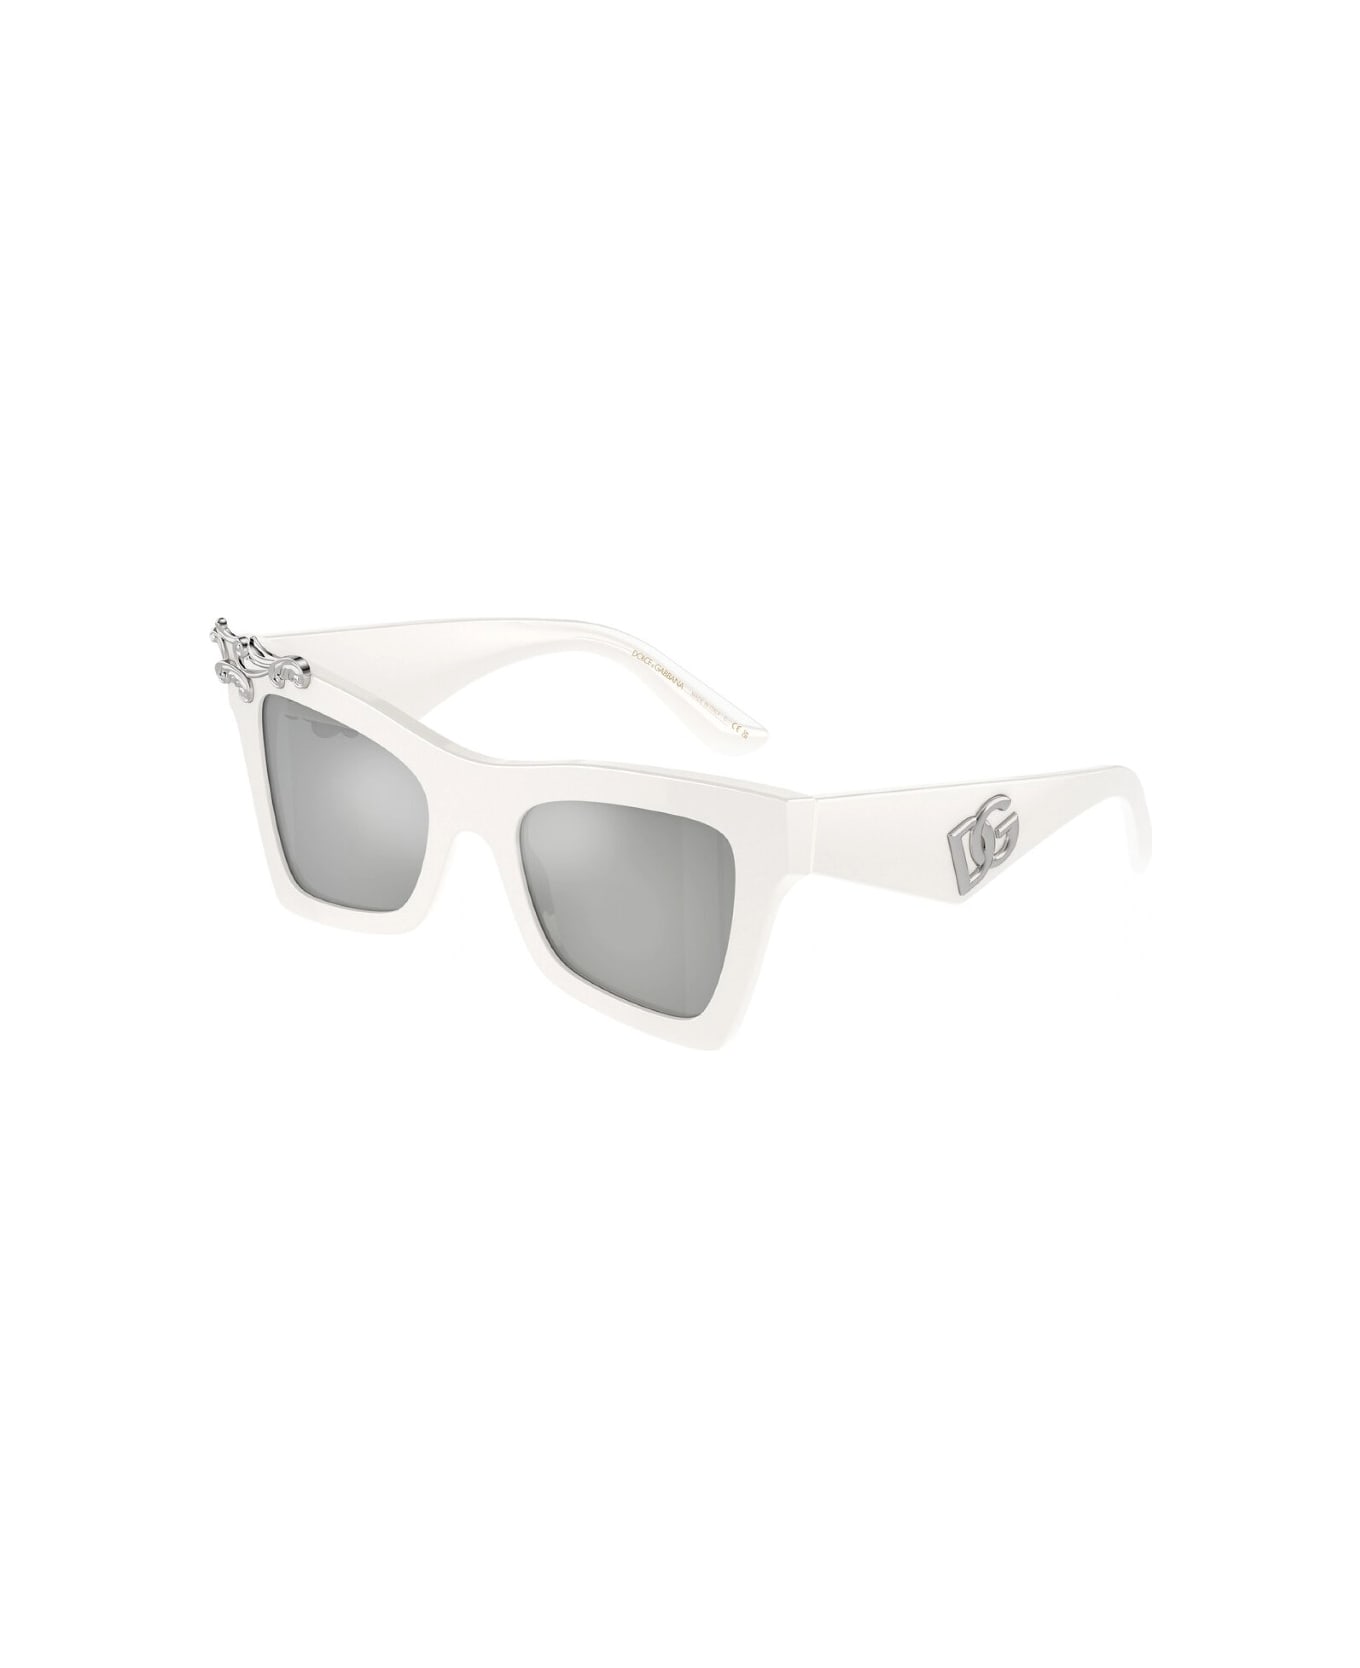 Dolce & Gabbana Eyewear DG4434s 3312/8V veneta Sunglasses - Bianco